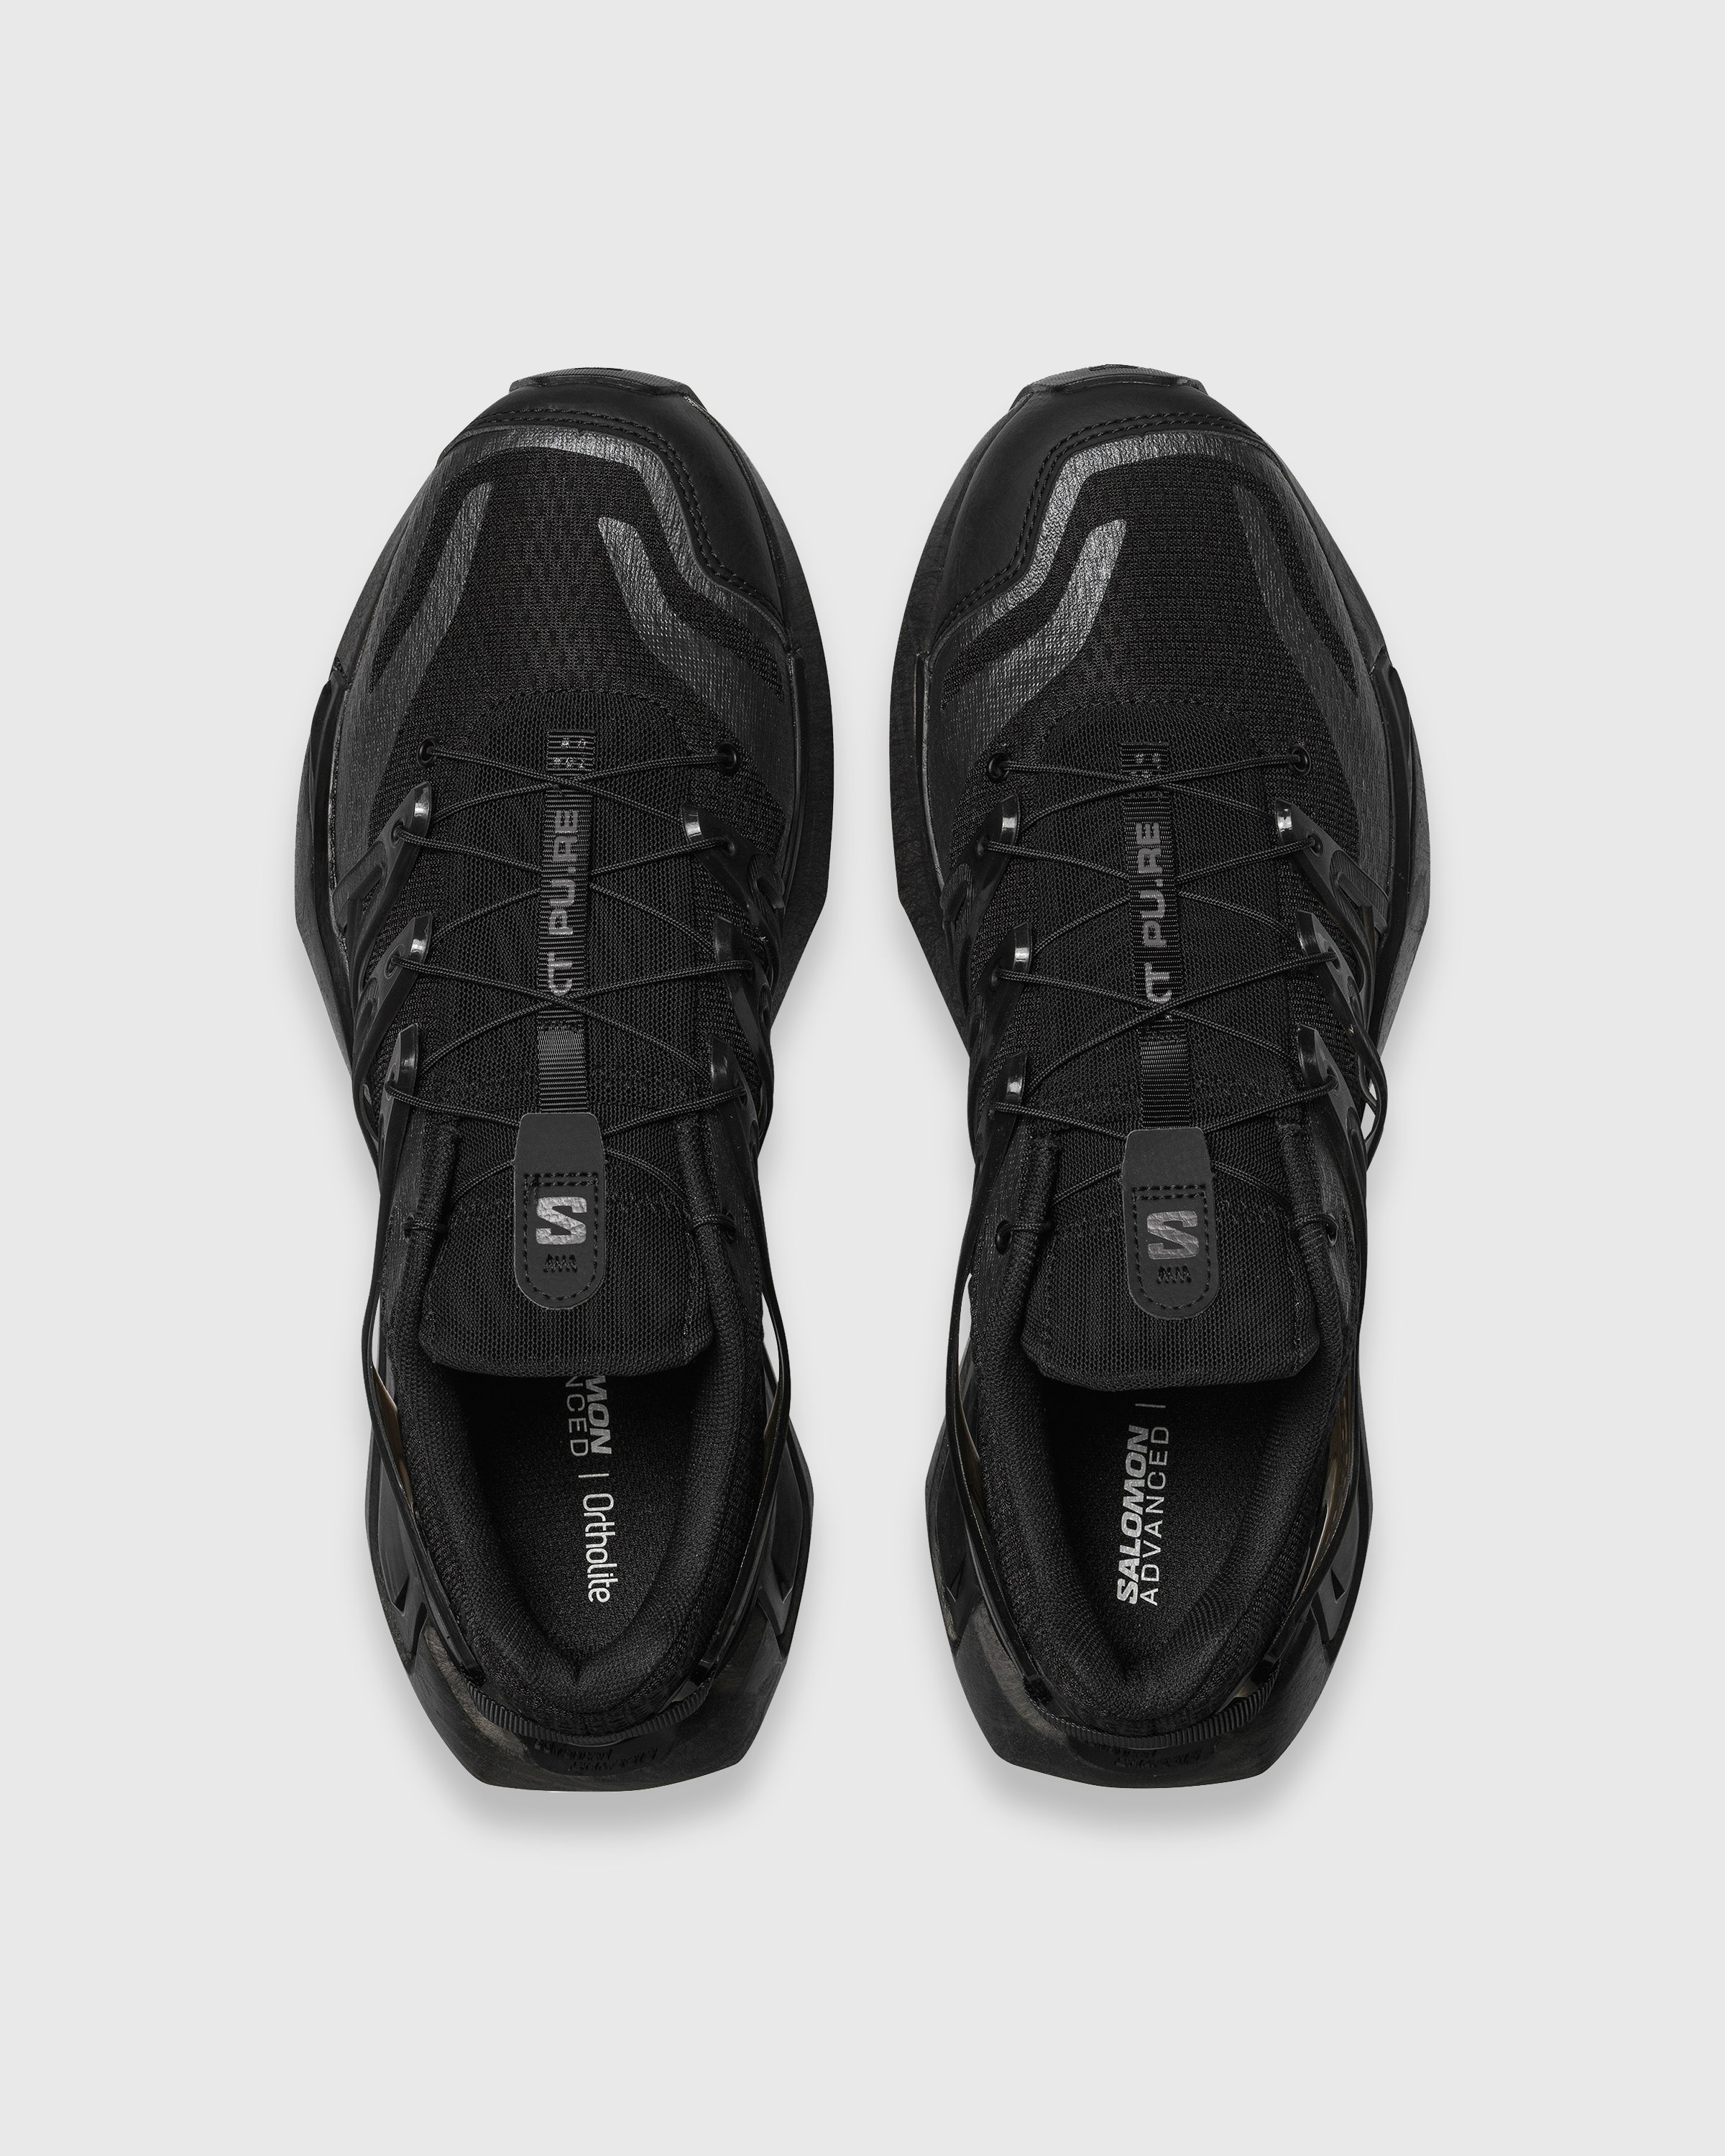 Salomon - XT PU.RE ADVANCED Black/Black/Pha - Footwear - Black - Image 4